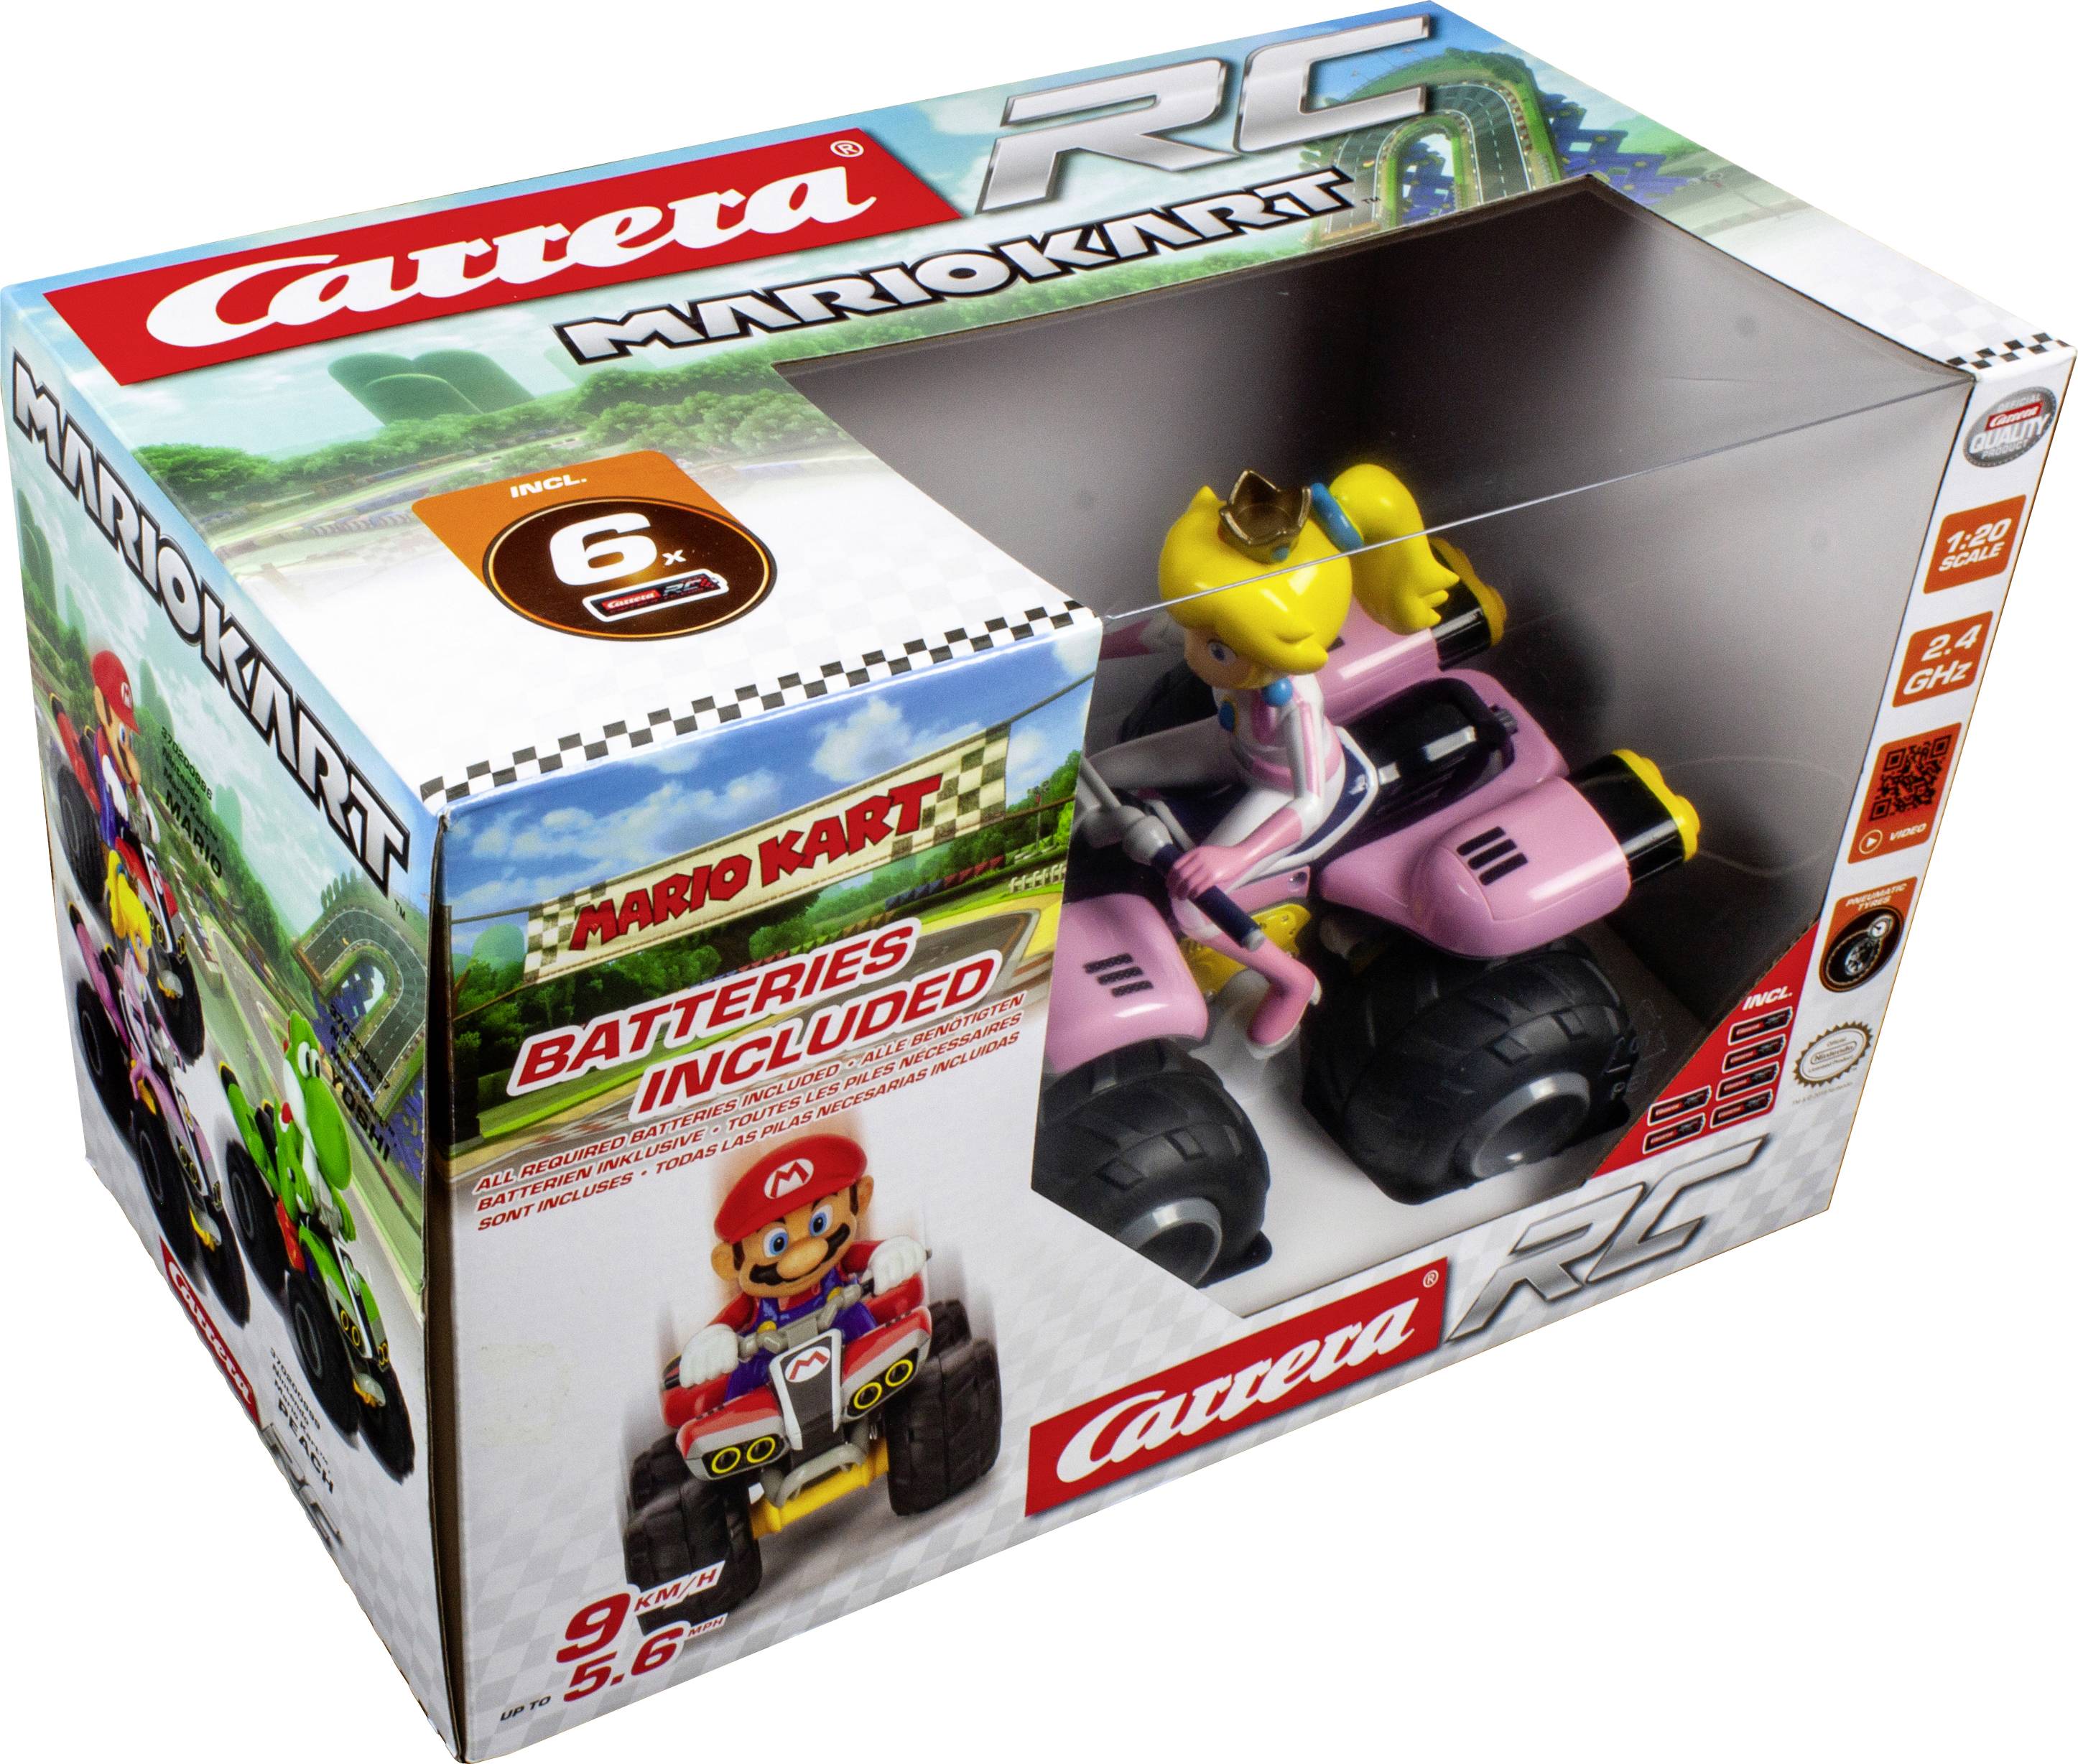 Carrera 370200999x Mario Kart Peach Quad 120 Rc Modelauto Voor Beginners Conradnl 9472